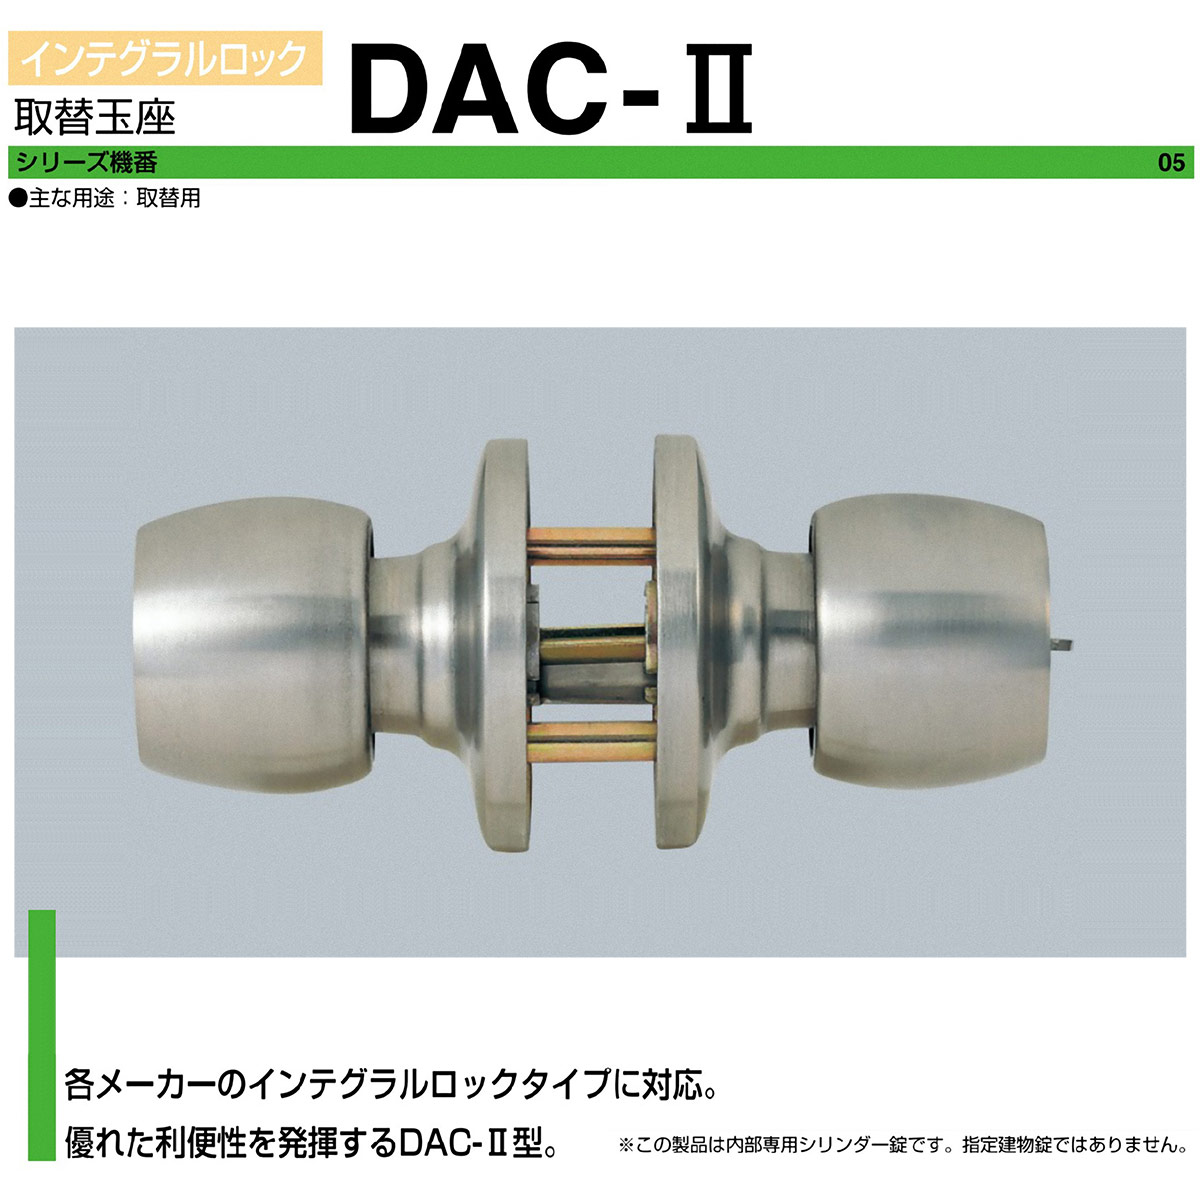 U-SHIN SHOWA DAC-2型 鍵シリンダー